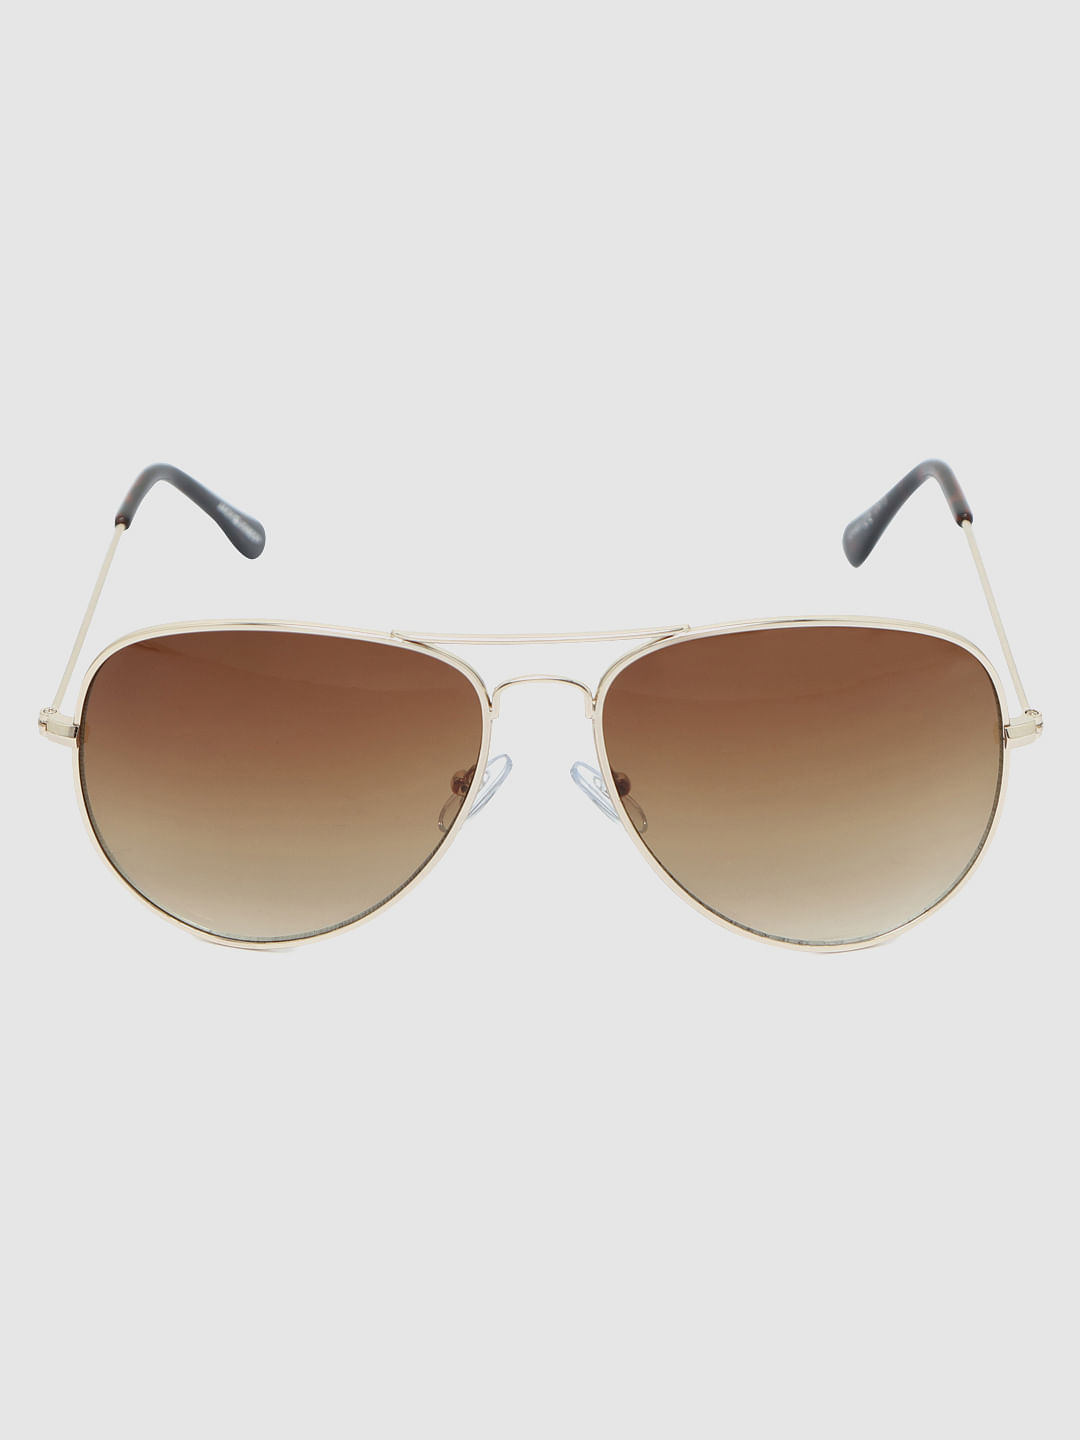 Buy RAYBAN Mens Half Rim Aviator Sunglasses | Shoppers Stop